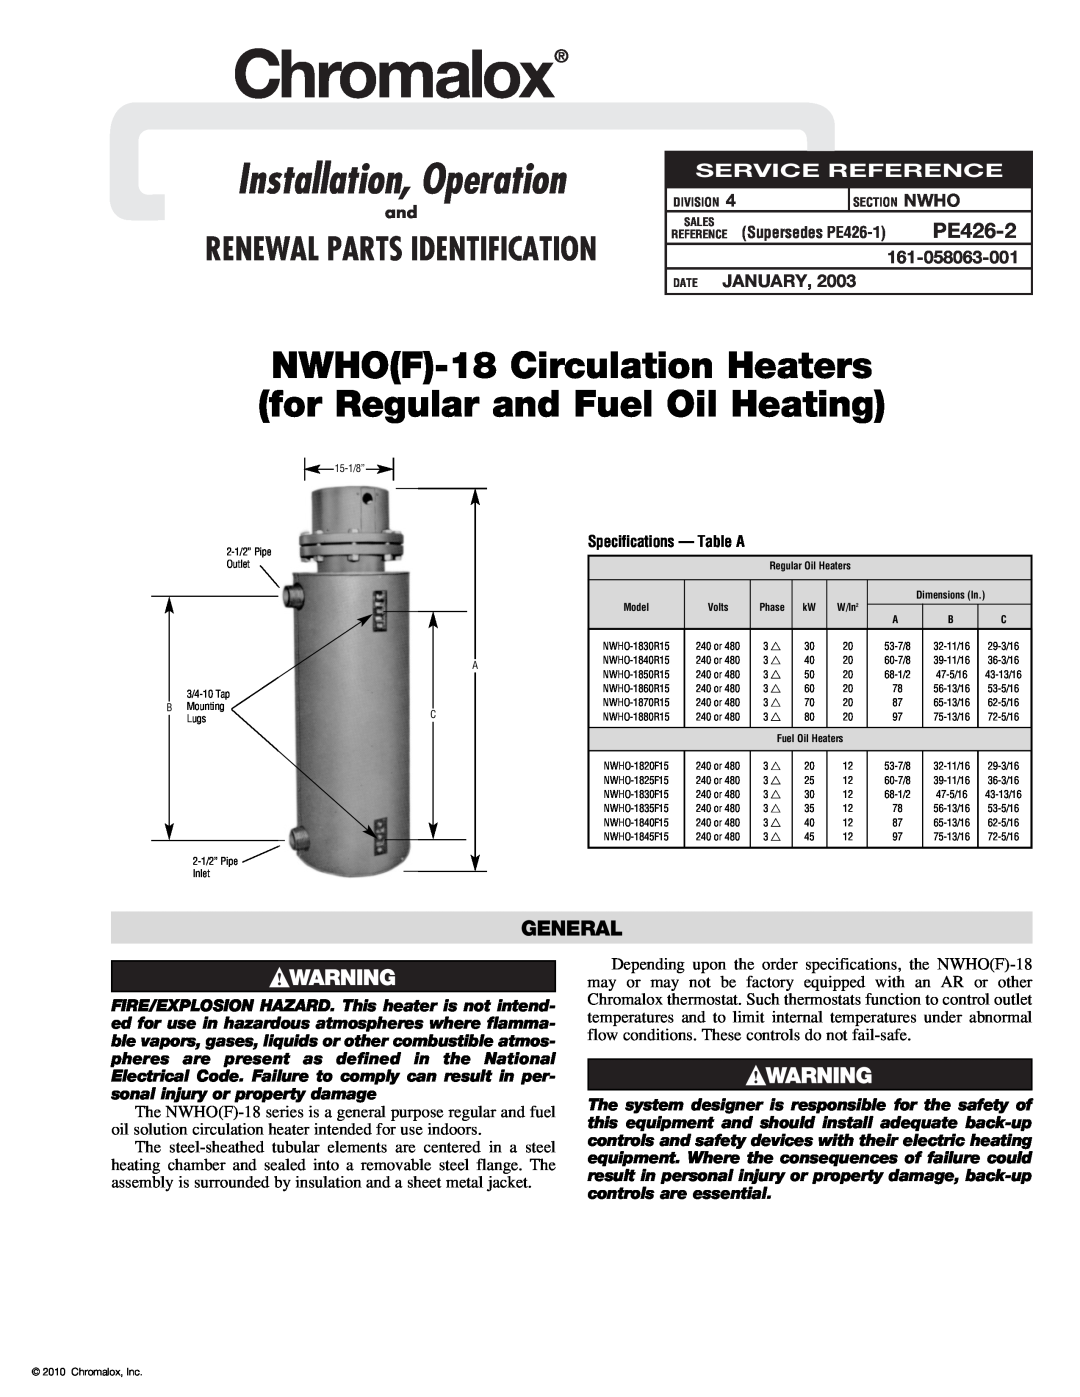 Chromalox PE426-2 specifications General, Chromalox, Installation, Operation, NWHOF-18Circulation Heaters, Date January 